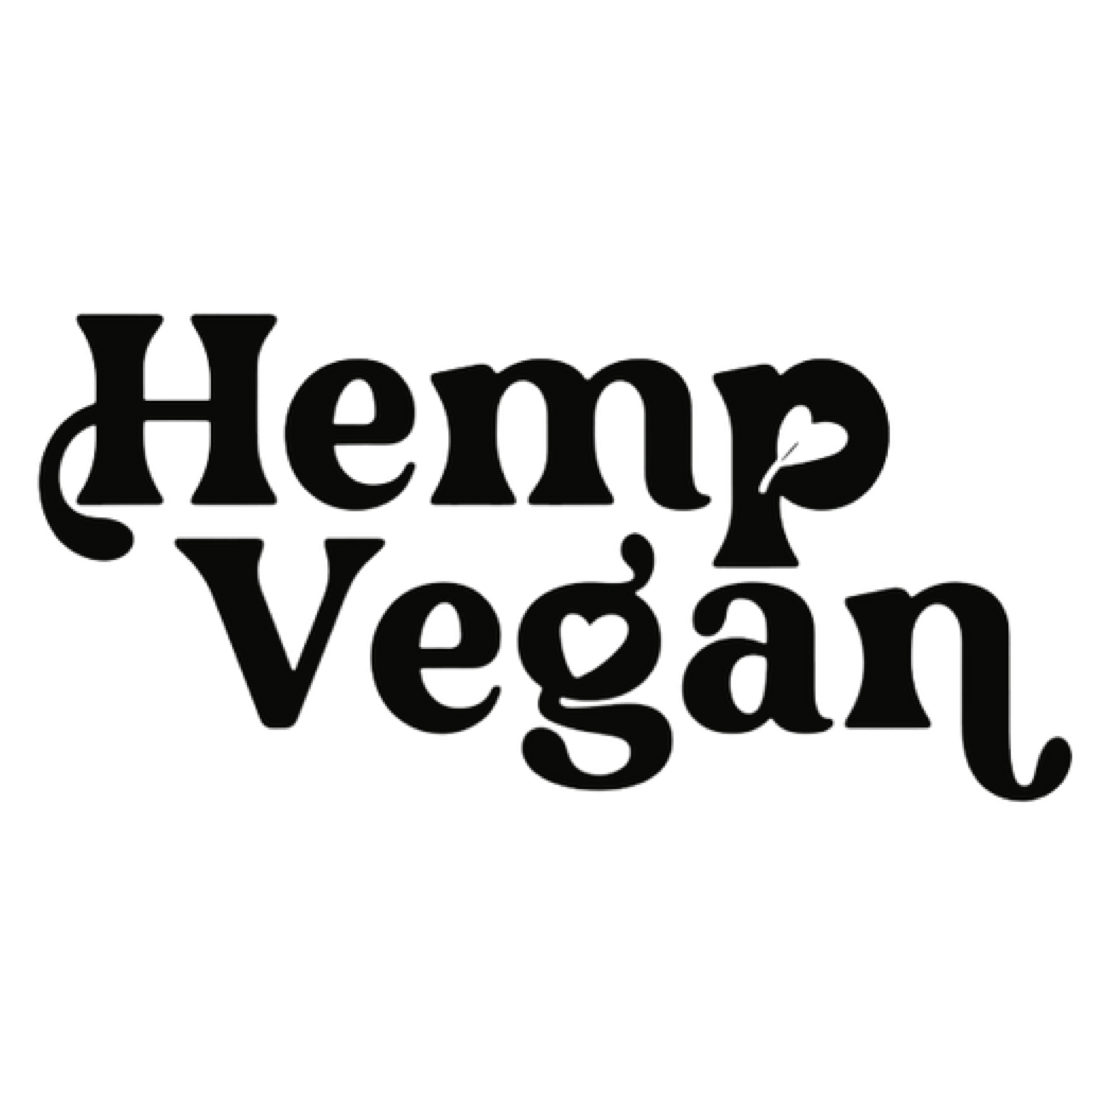 Hemp Vegan Hempodere-se! Programa de Revendas